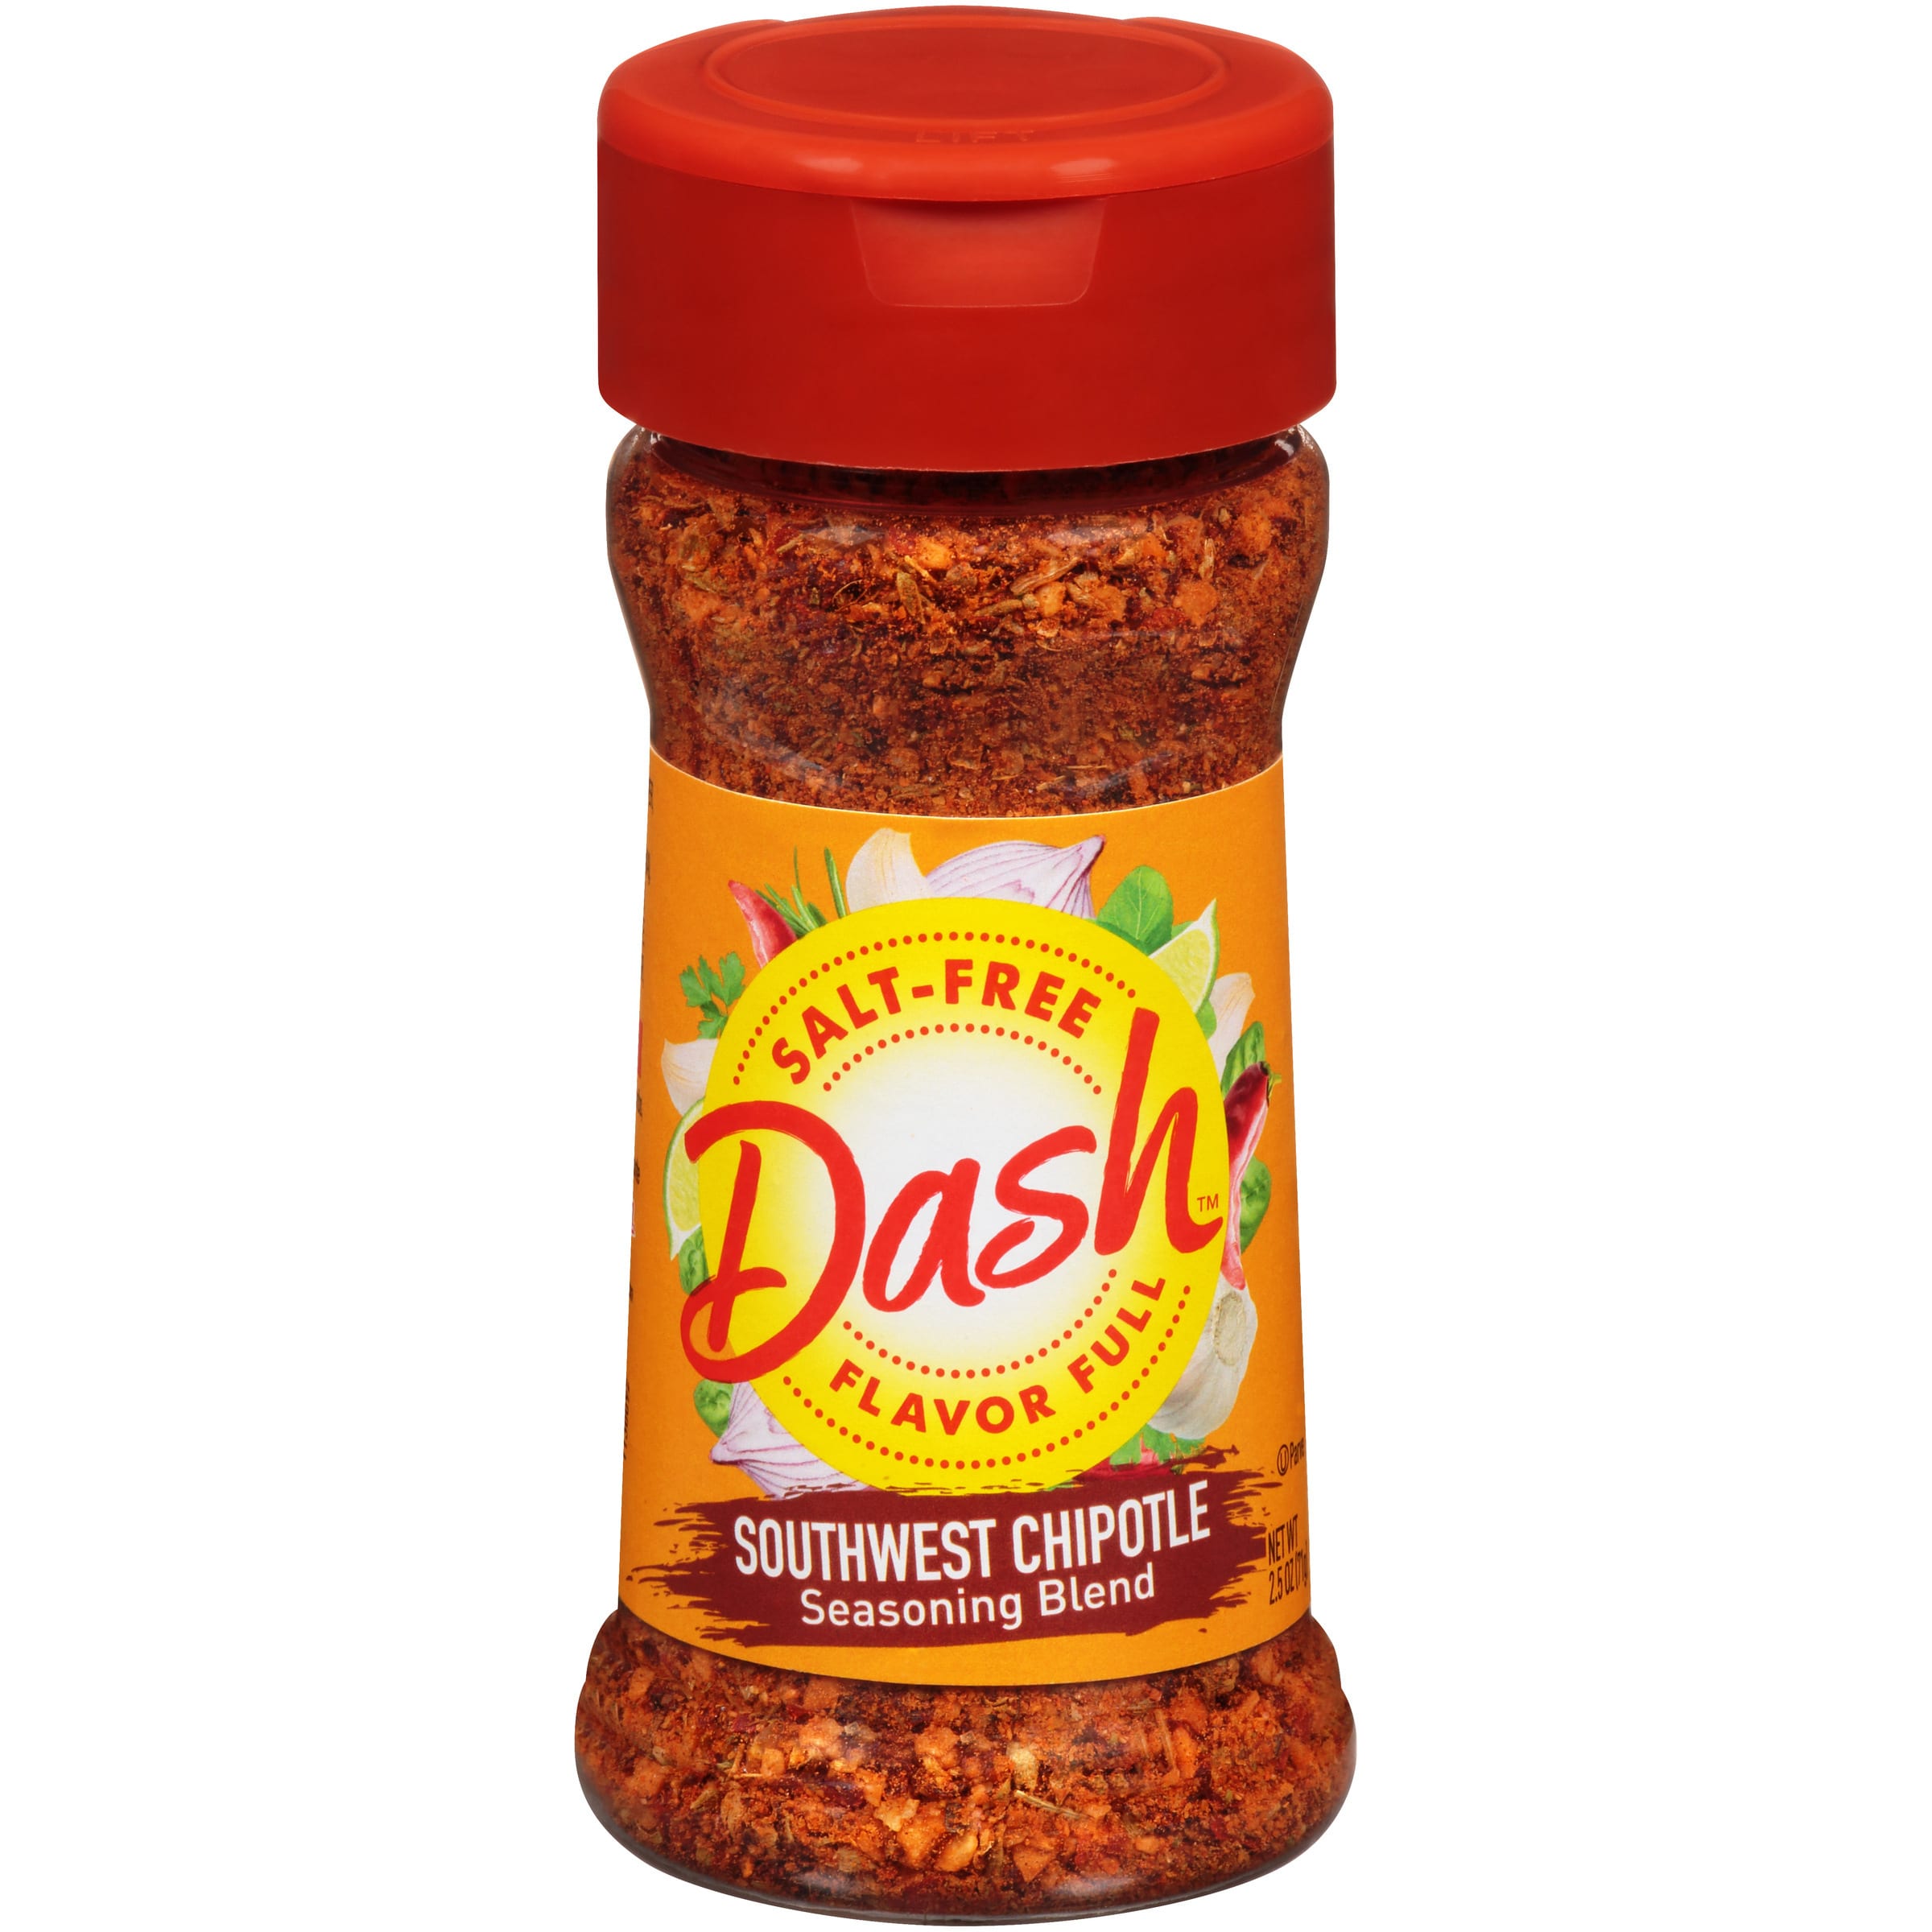 Dash Table Blend Seasoning Blend, Salt-Free, 6.75 oz 